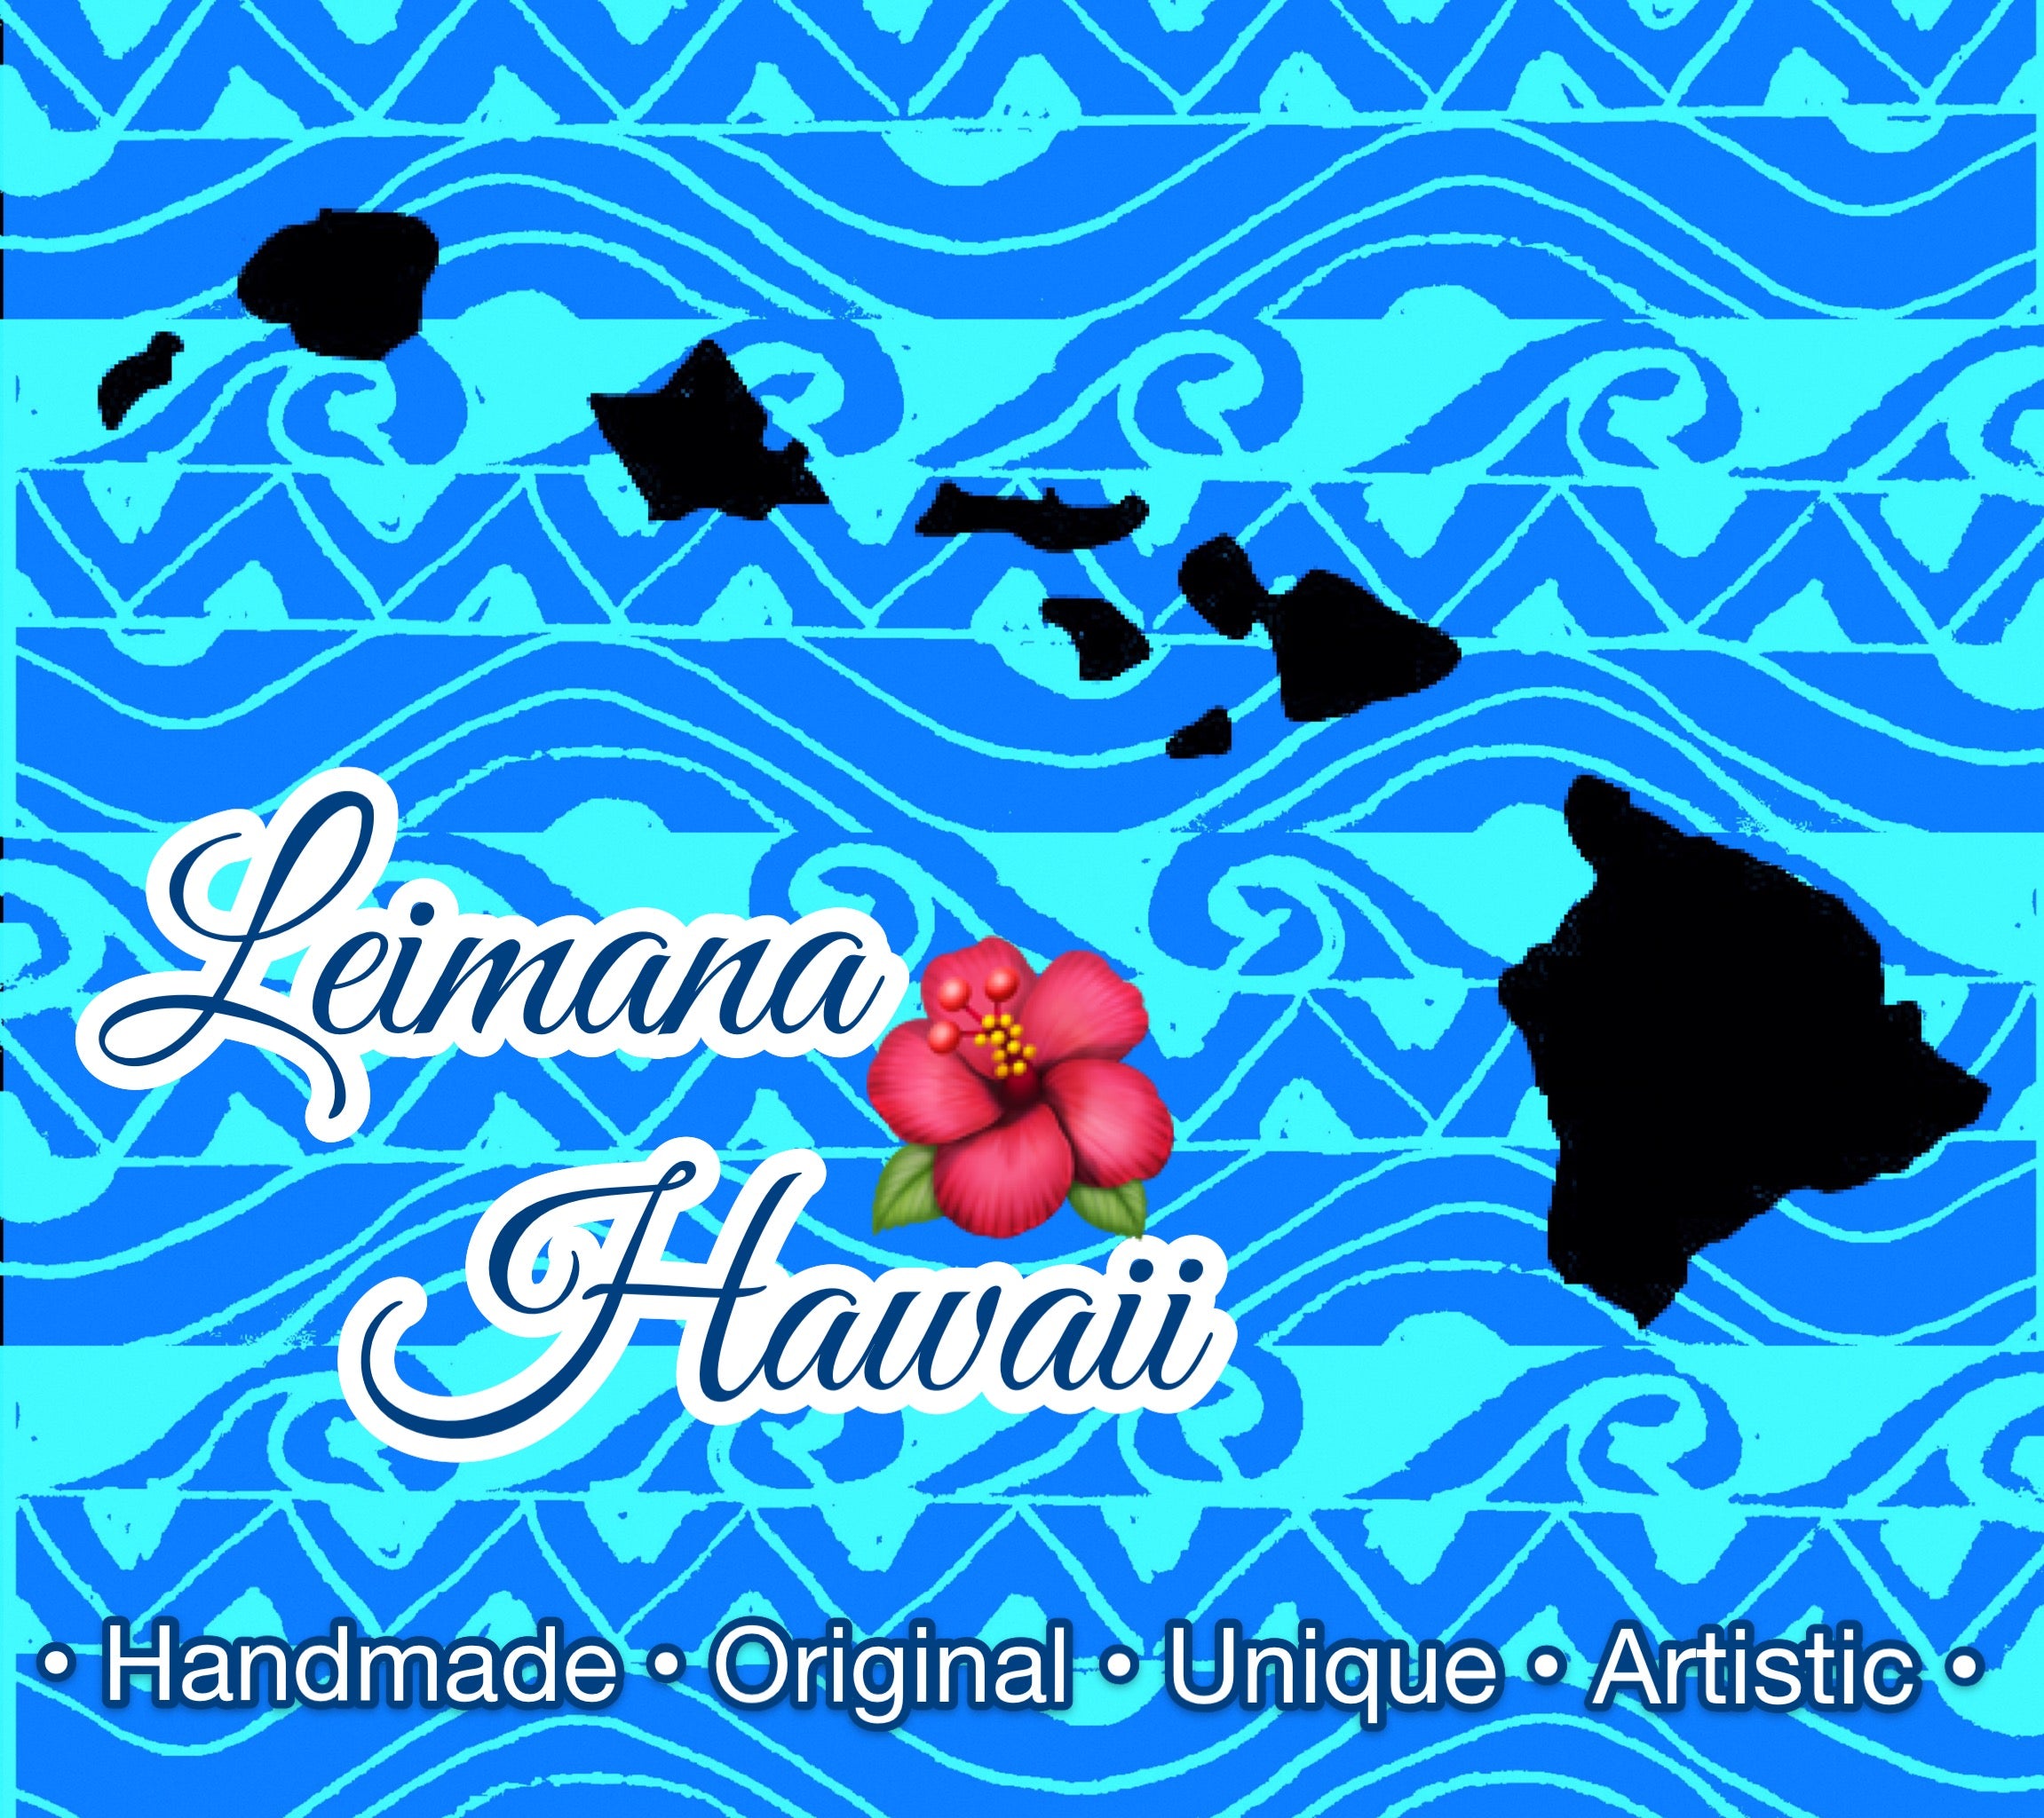 Leimana Hawaiian Artisan Jewelry &amp; Gifts